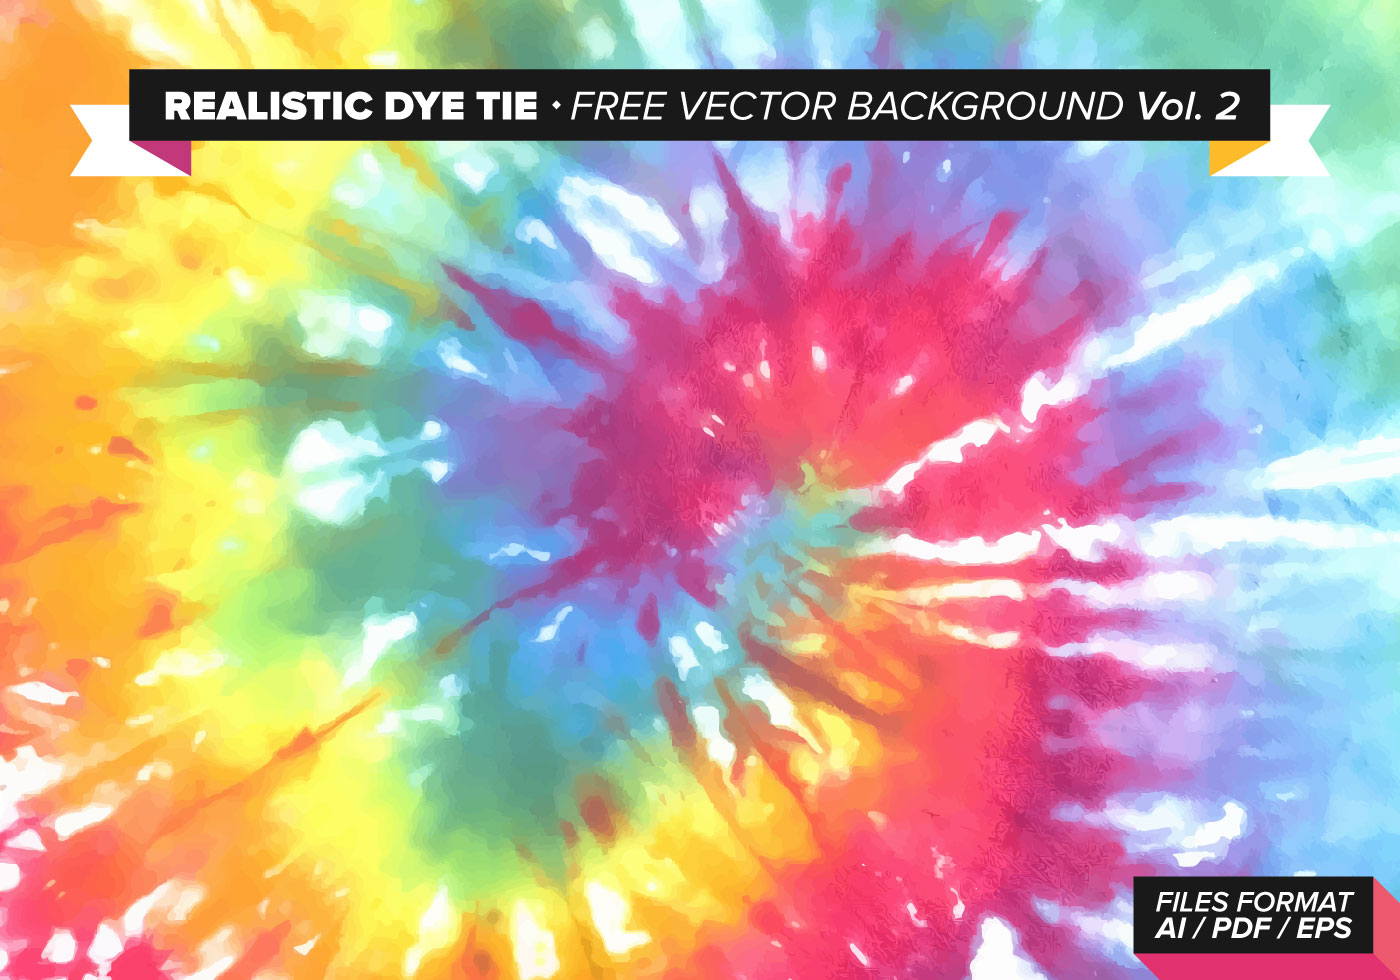 Realistic Dye Tie Free Vector Background Vol. 2 - Download Free Vector